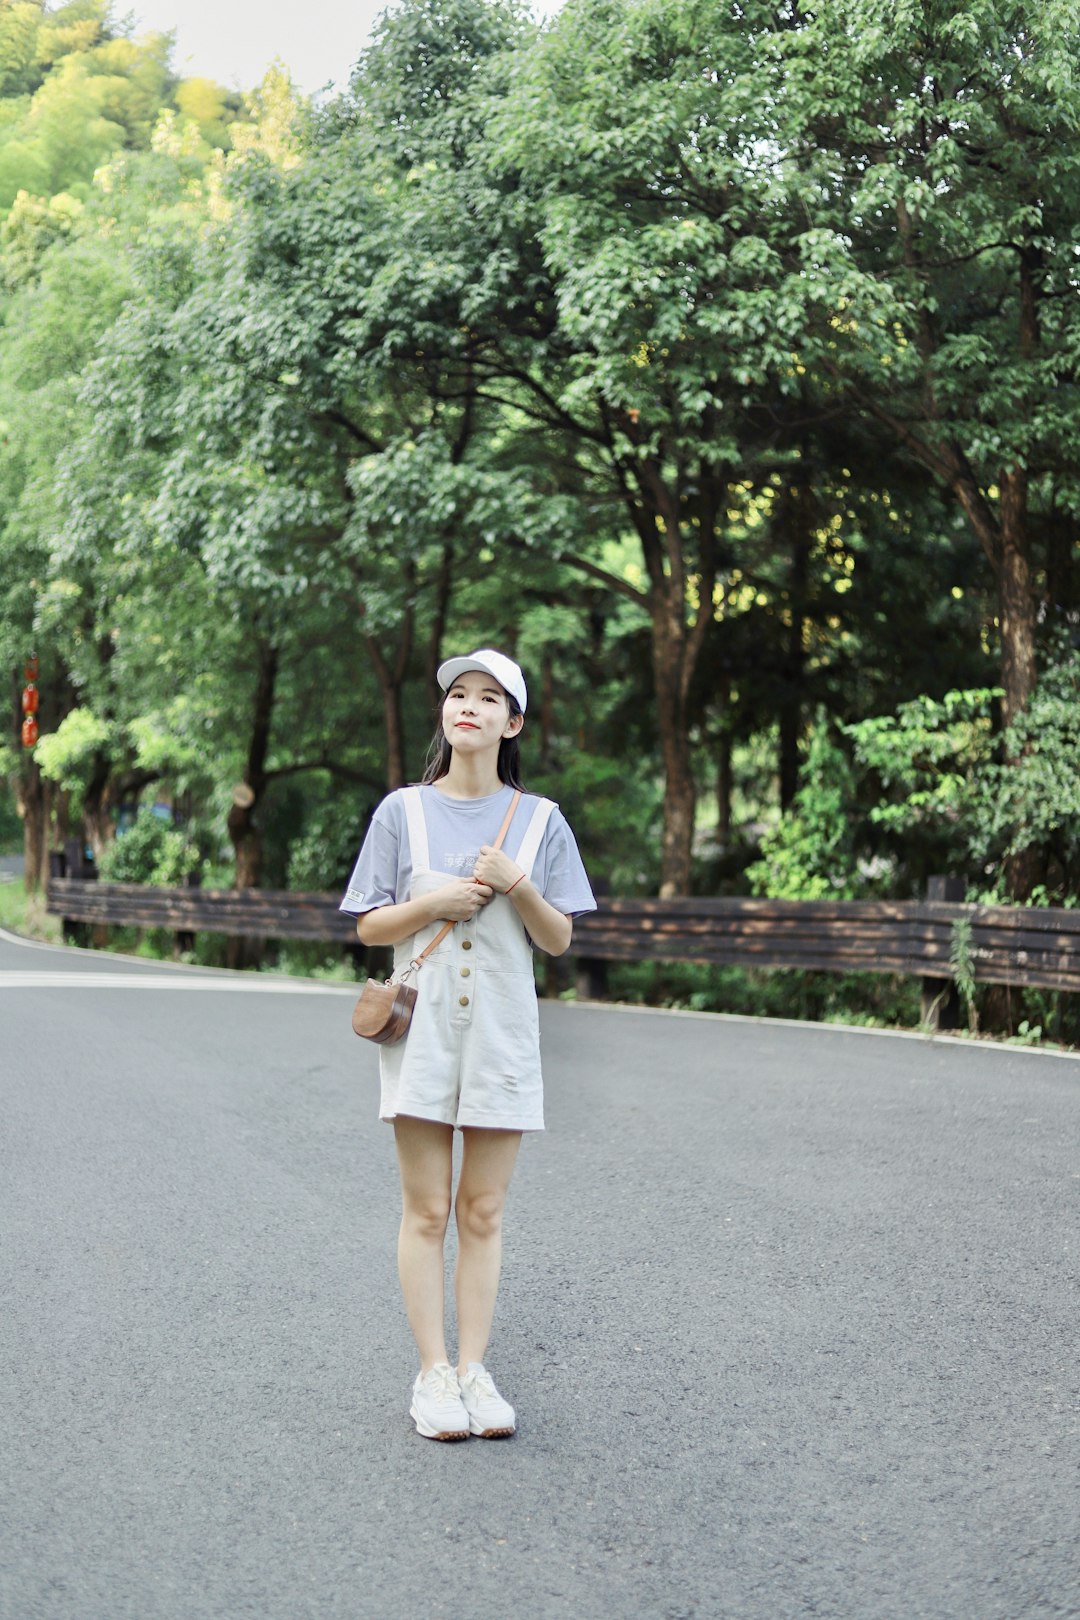 woman in white dress standing on gray asphalt road during daytime